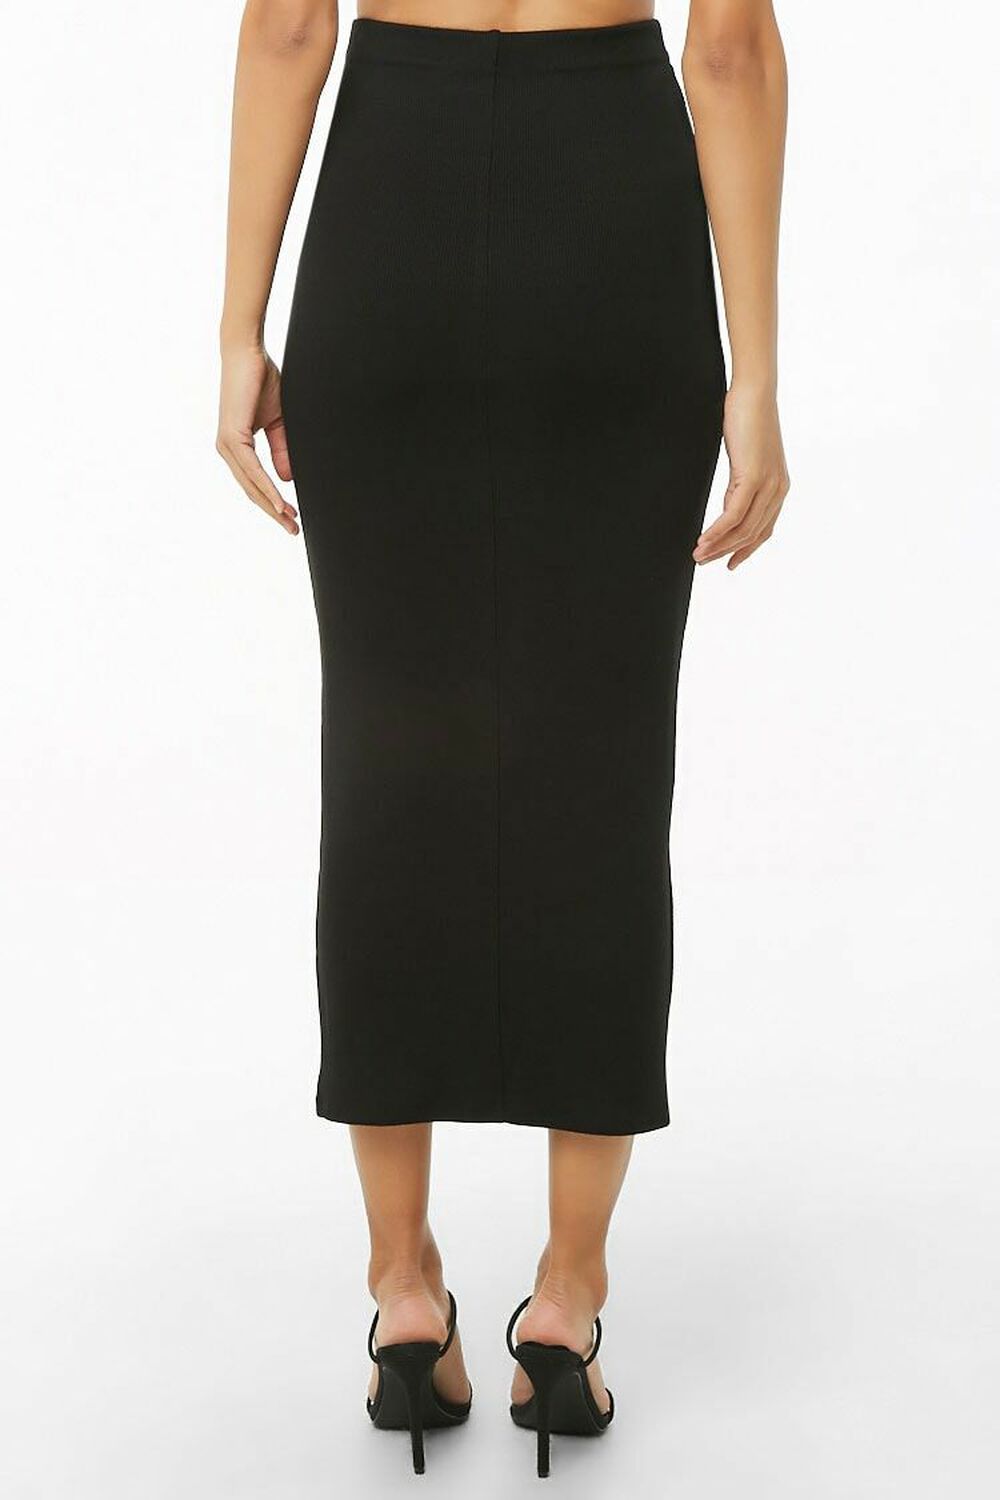 BLACK Ribbed High-Rise Midi Skirt, image 3